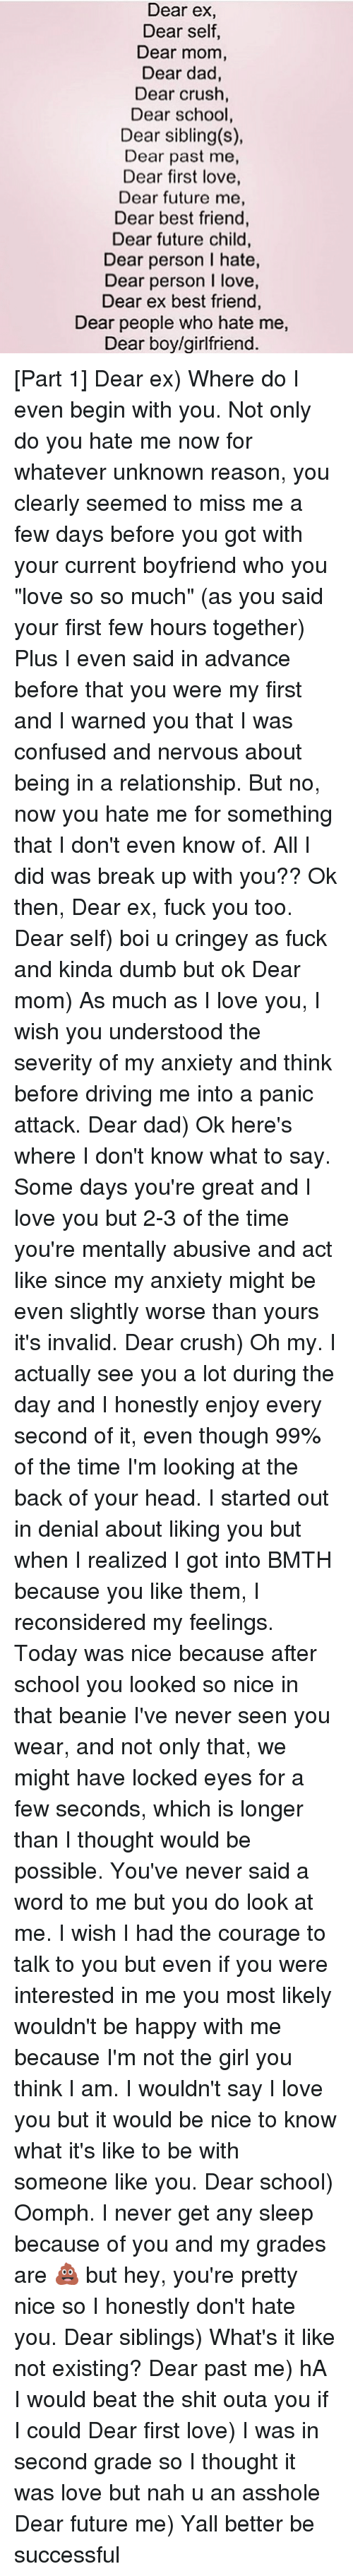 Dear dad whom is an asshole